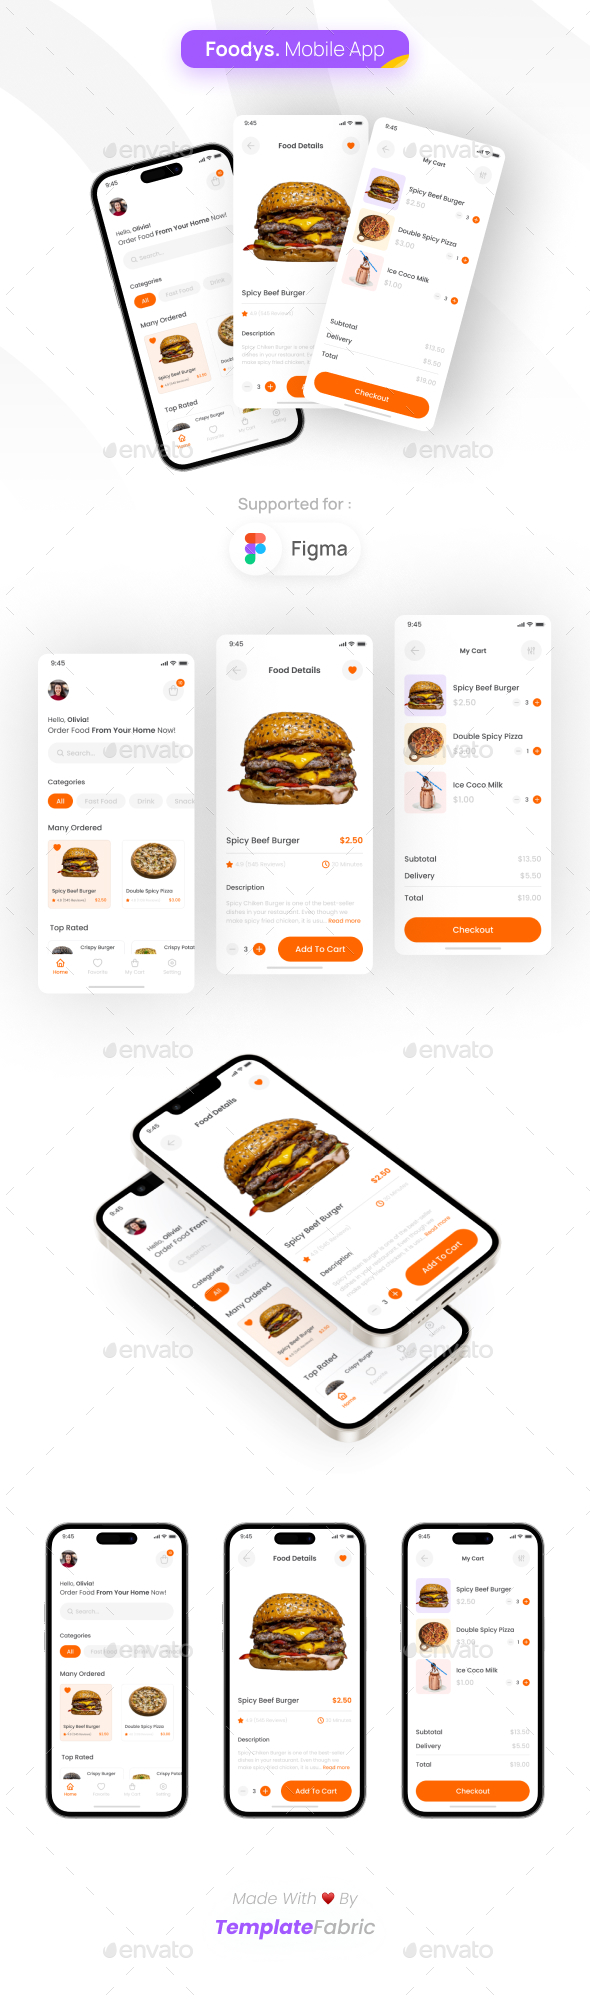 [DOWNLOAD]Foodys - Food Delivery Mobile App UI Kit